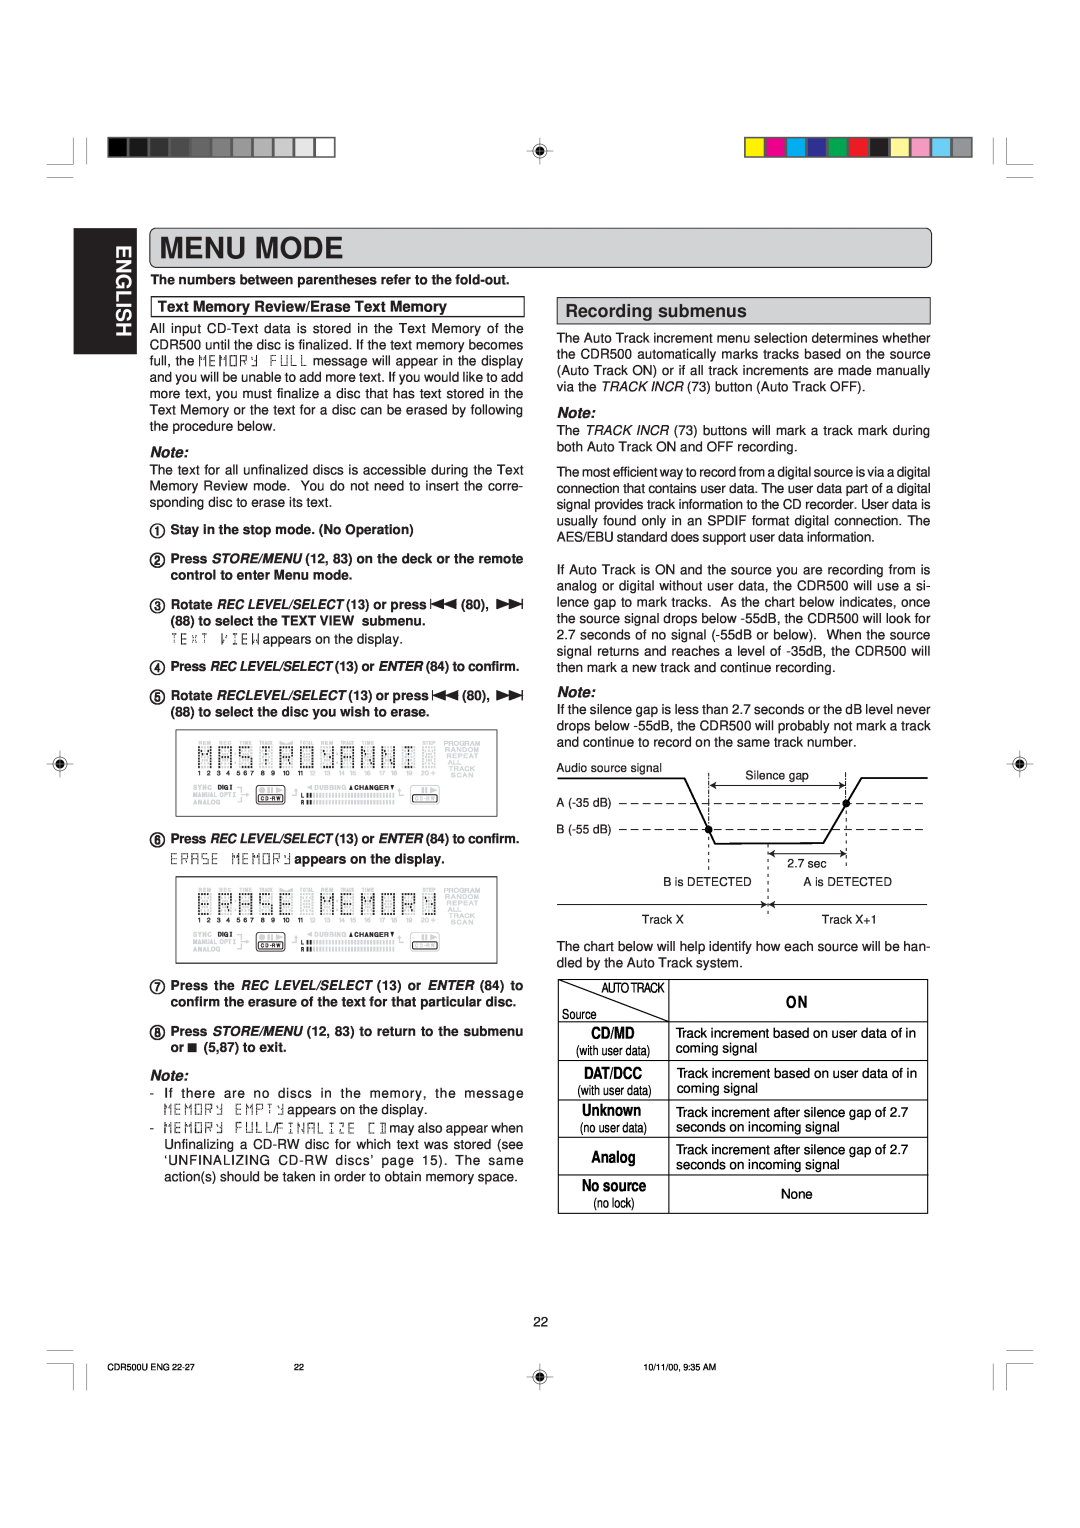 Marantz CDR500 manual Menu Mode, English, Recording submenus, Text Memory Review/Erase Text Memory 